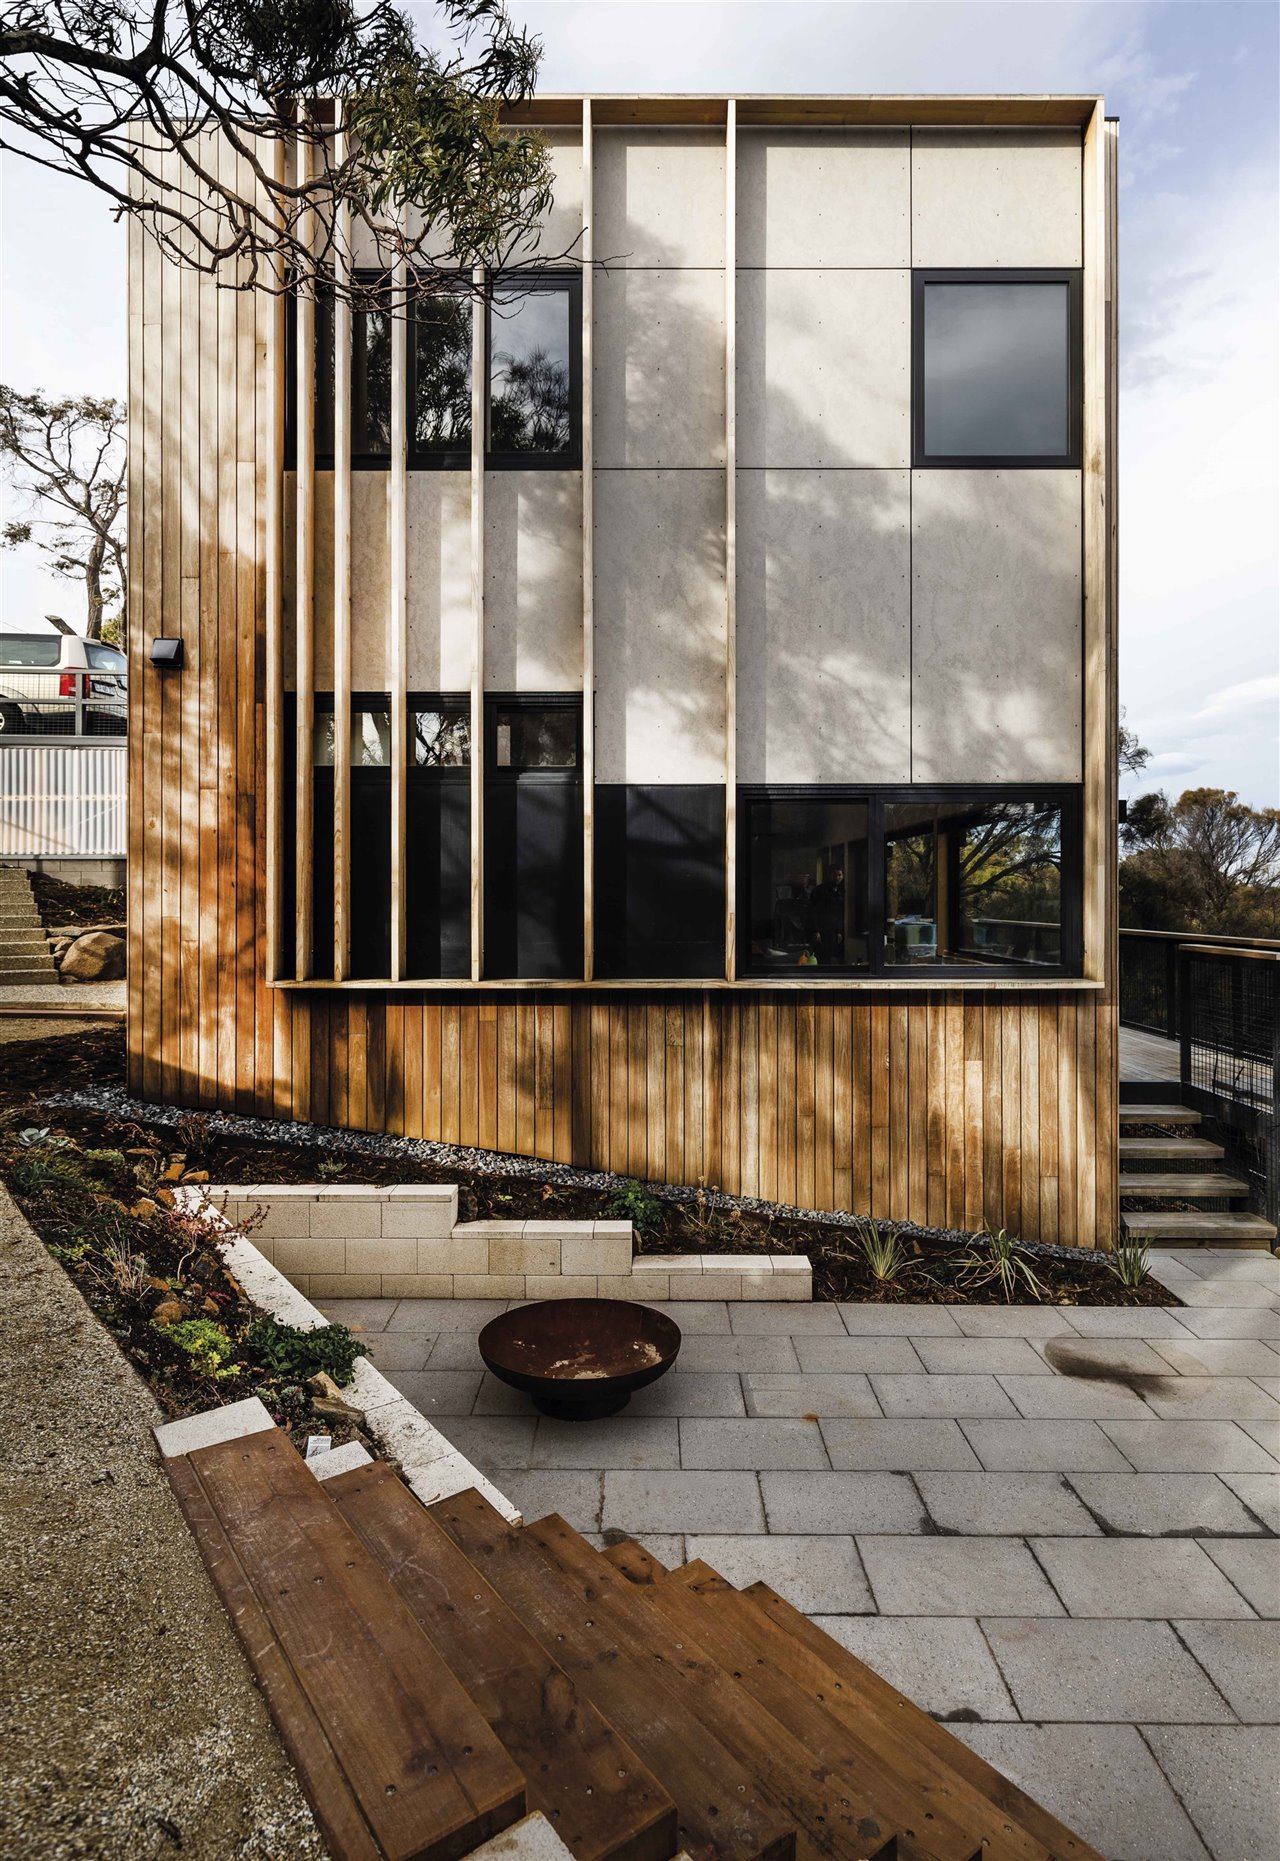 Midway Point House en Tasmania, Australia, de Cumulus Studio.